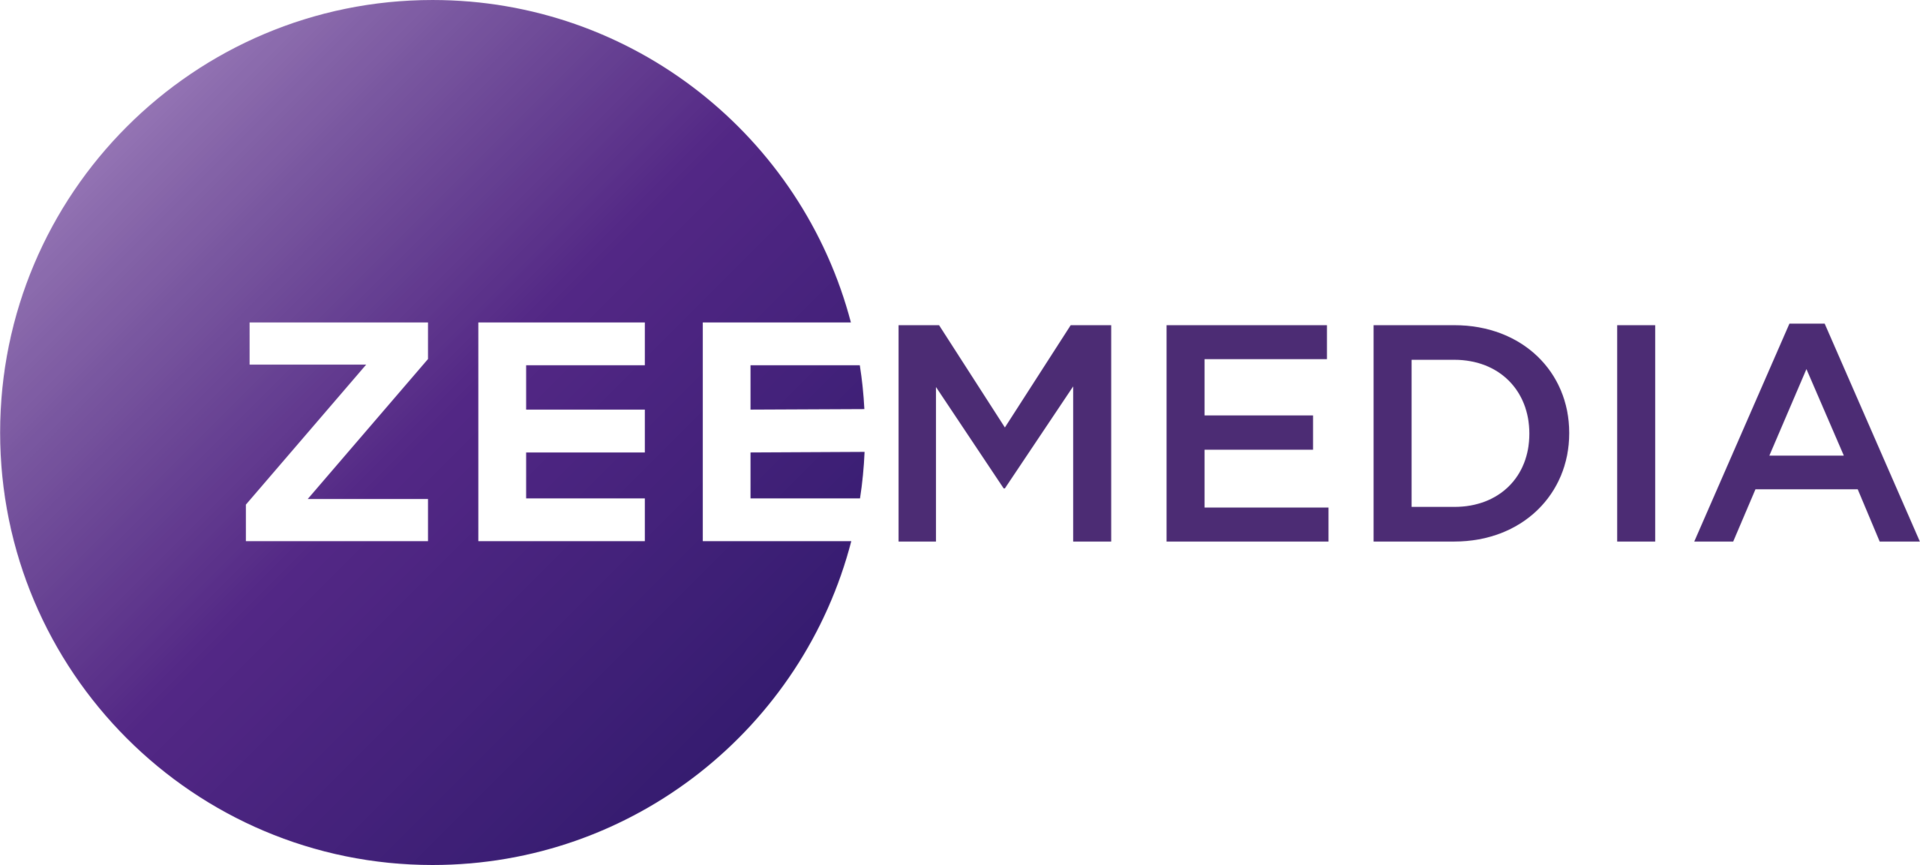 Zee_media_logo.svg